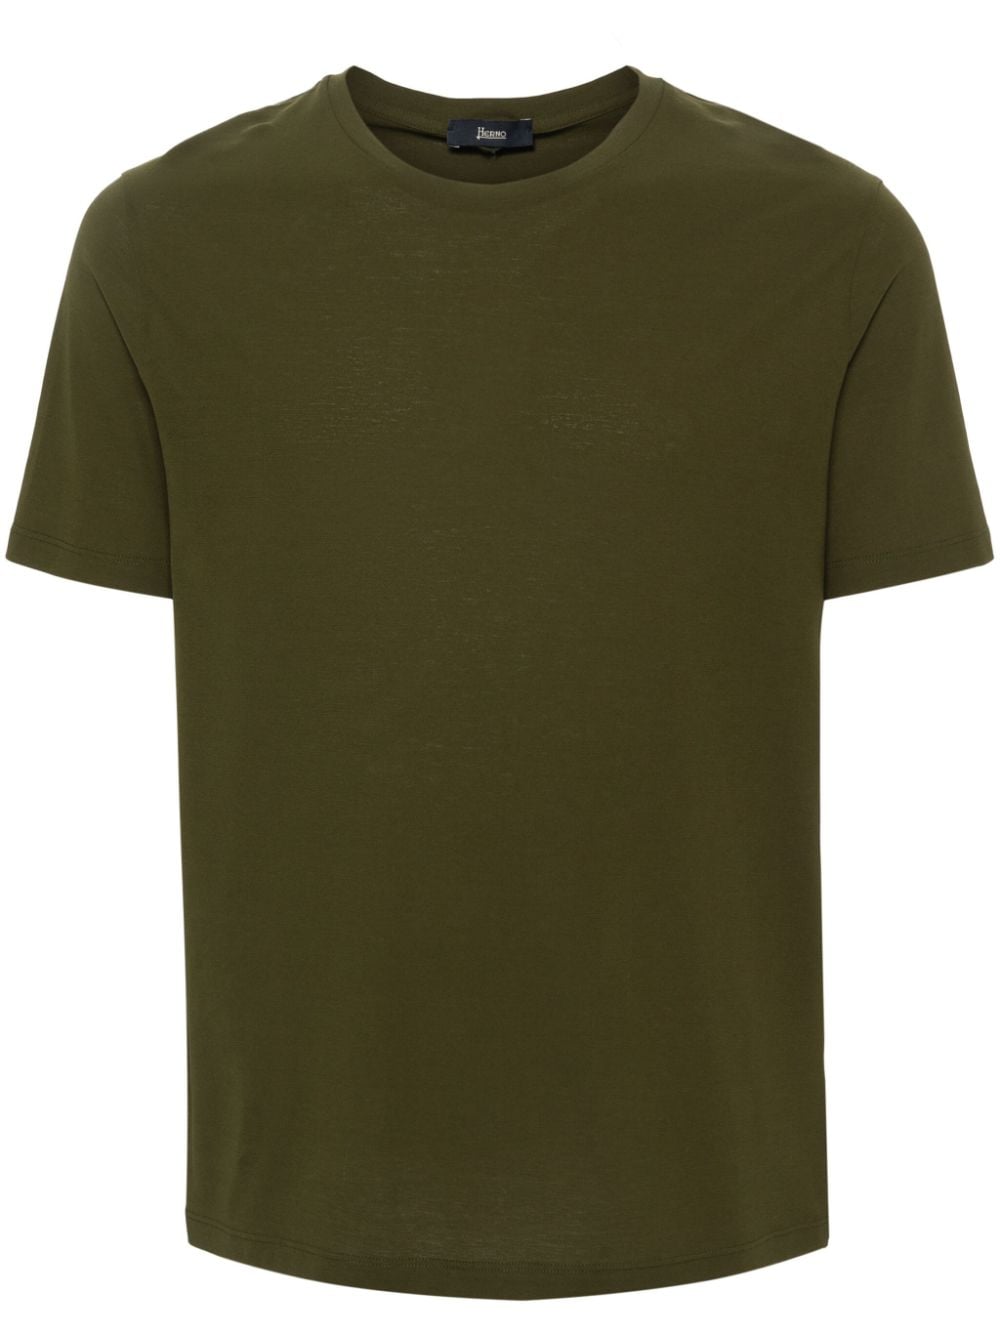 Basic green t-shirt